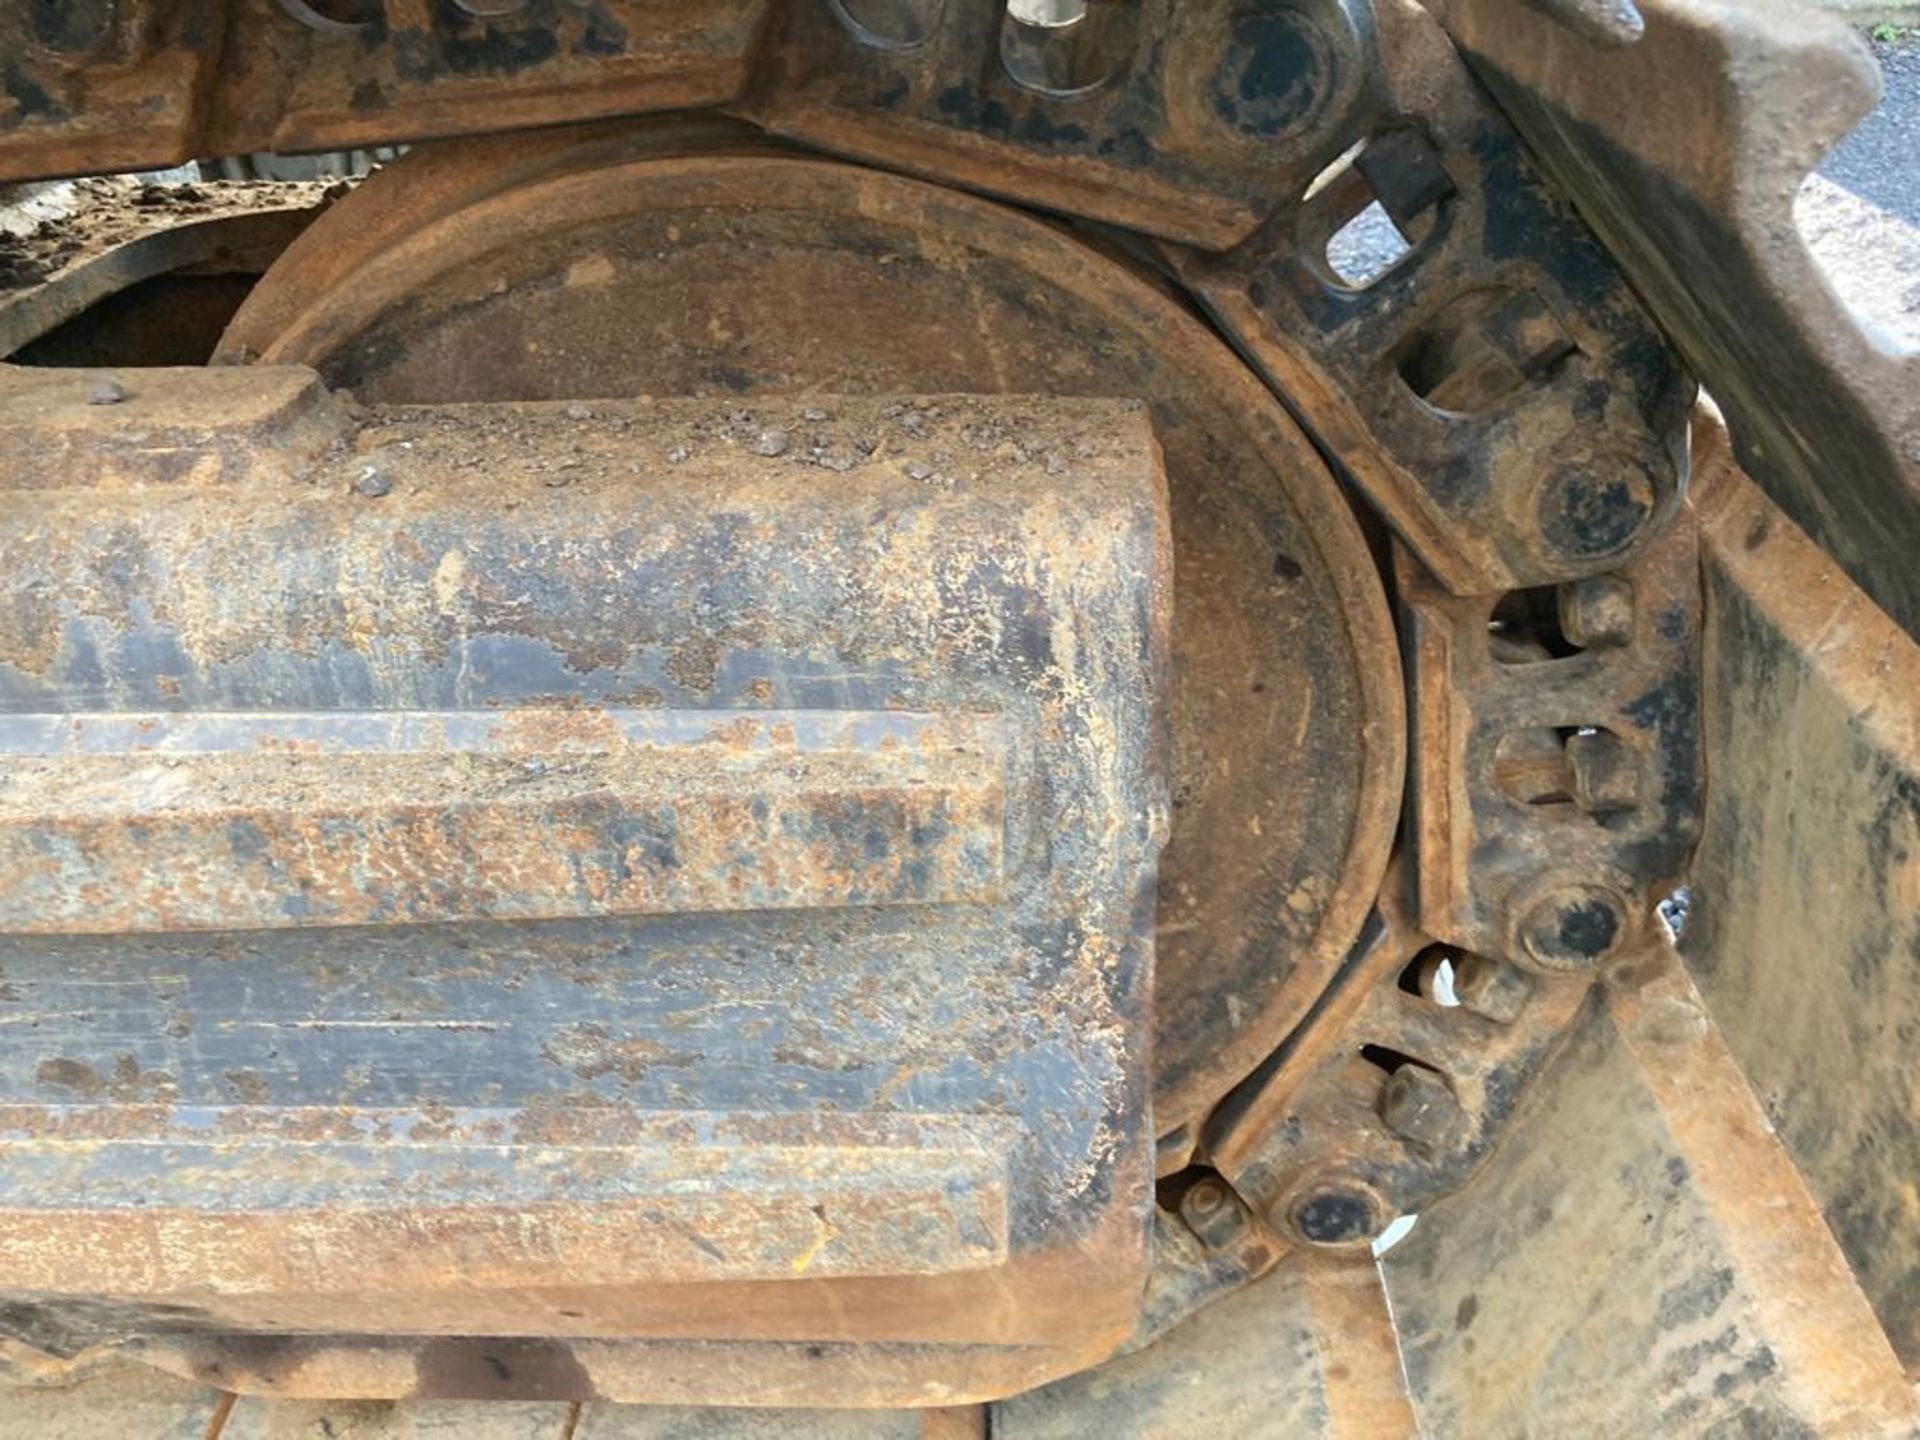 Direct from Volvo Main Dealer, 2018 (EC380EL) Tracked Excavator - Image 10 of 25